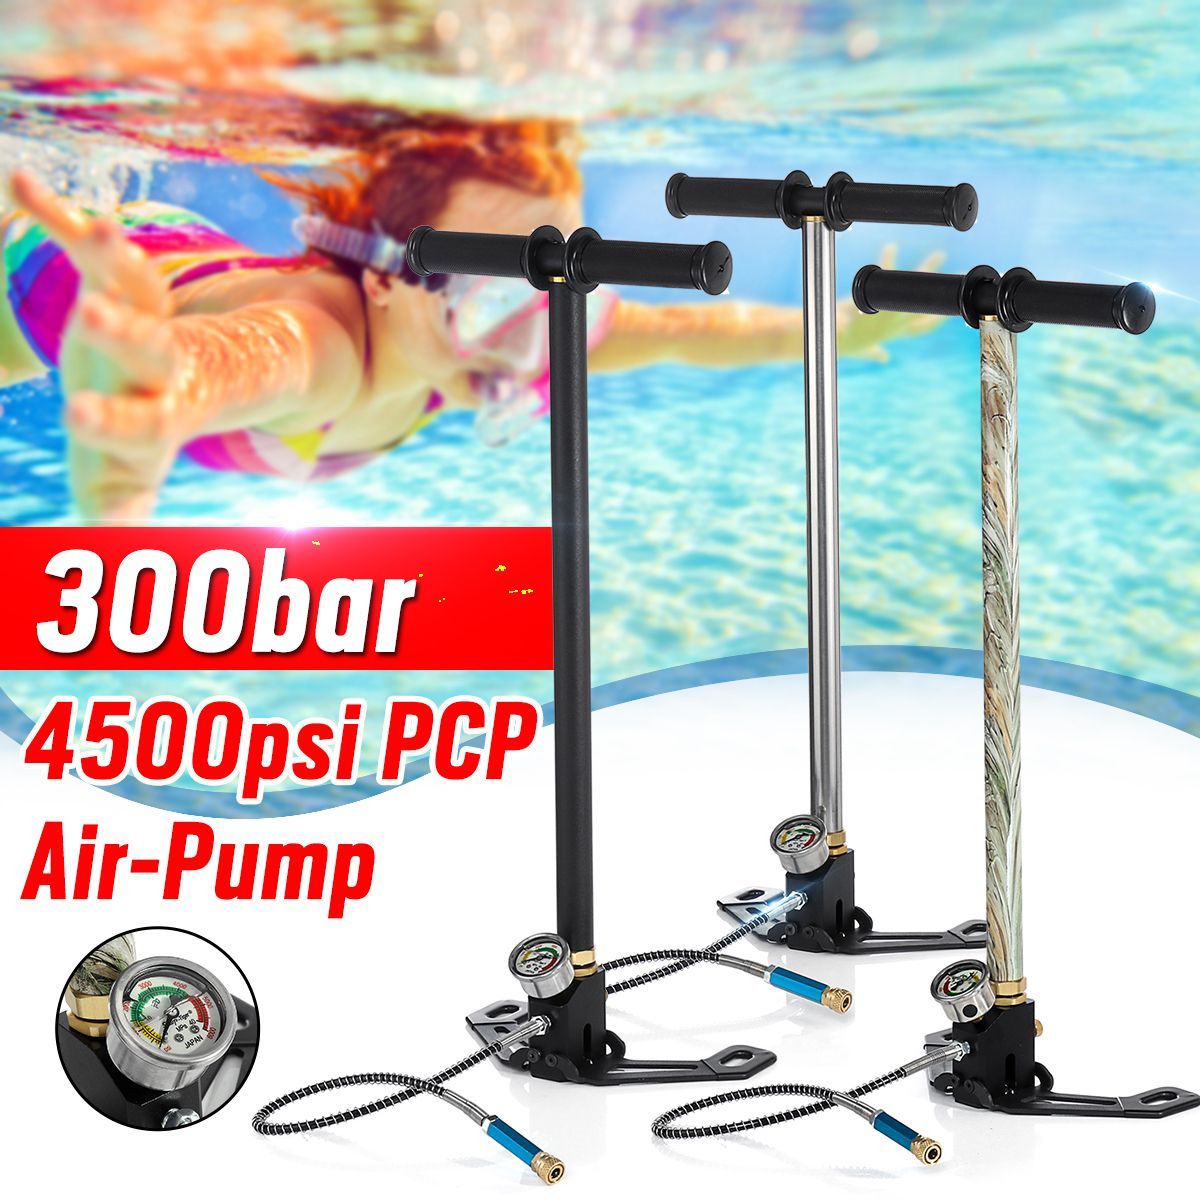 300bar-4500psi-PCP-Air-Pump-Stainless-Steel-Hand-Pump-Charging-Gas-Filter-Gauge-1680158